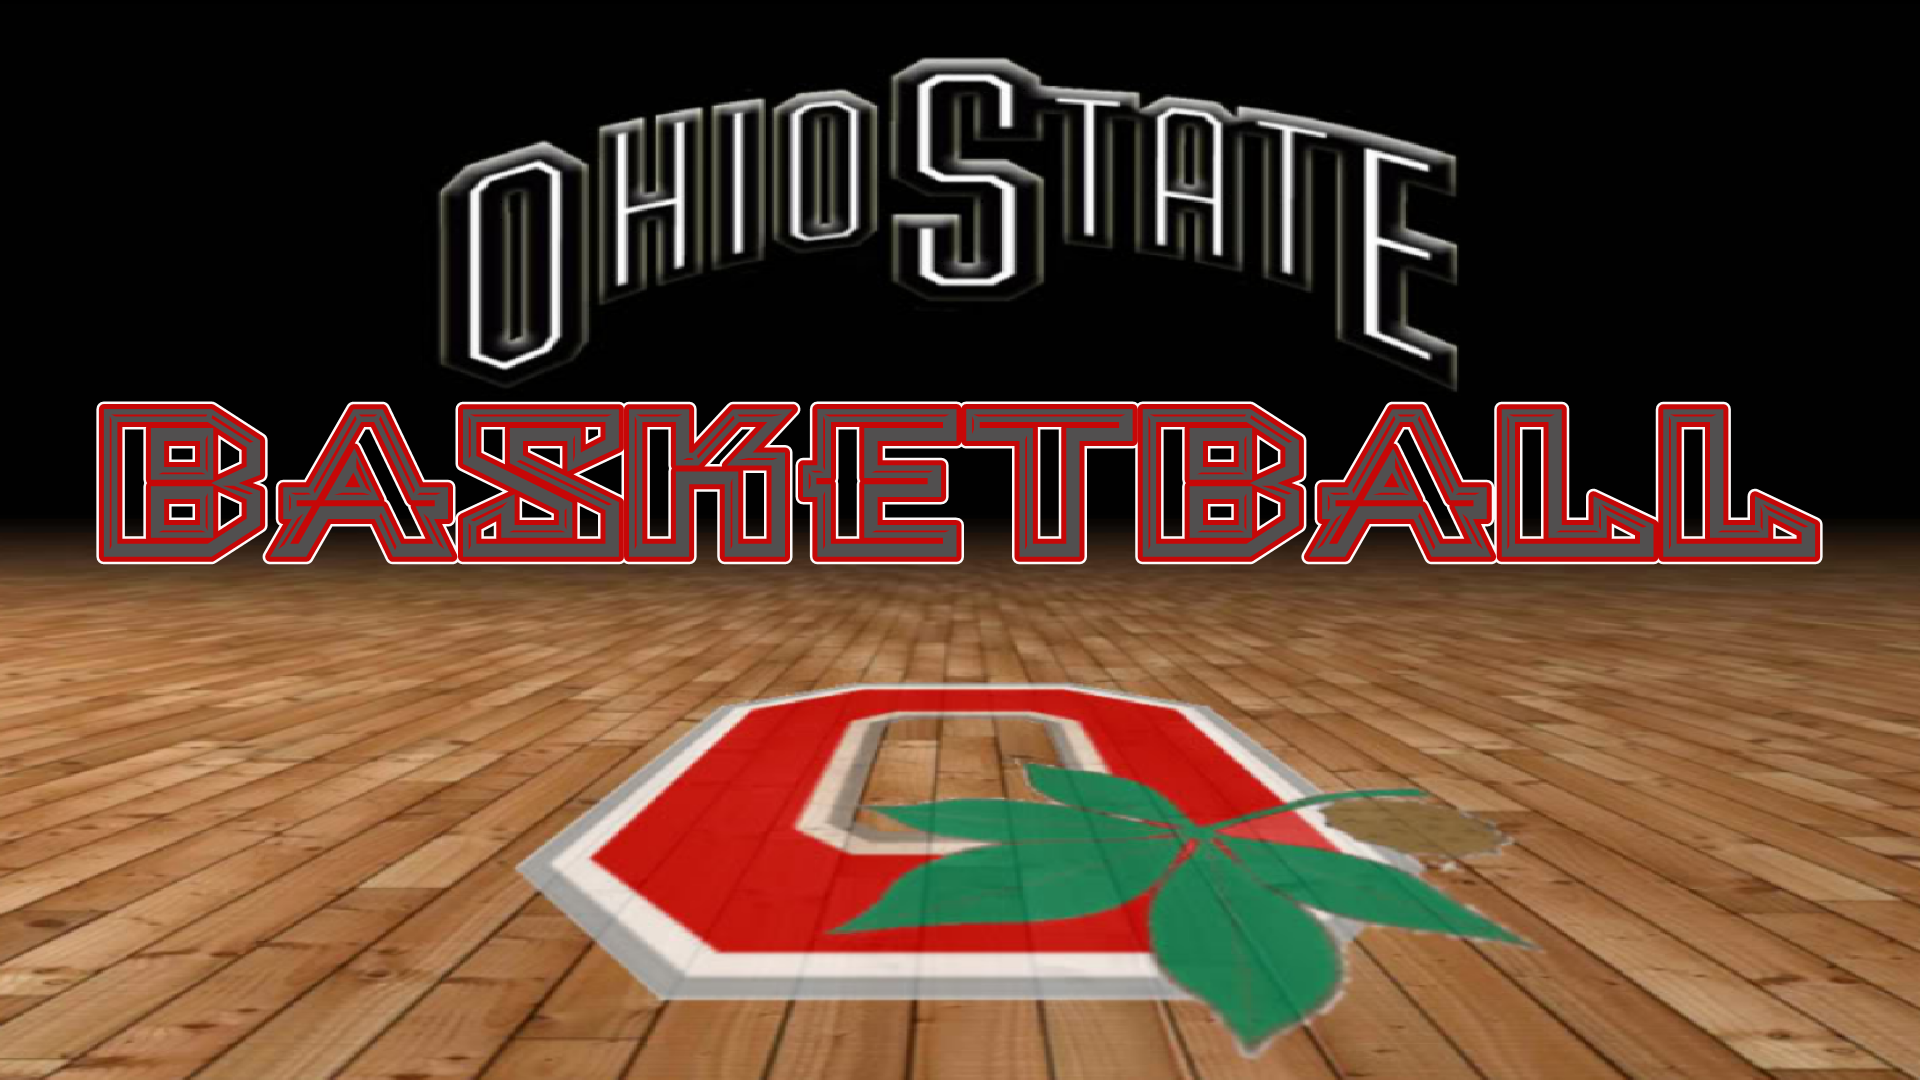 Ohio State Buckeyes Basketball Red Block O